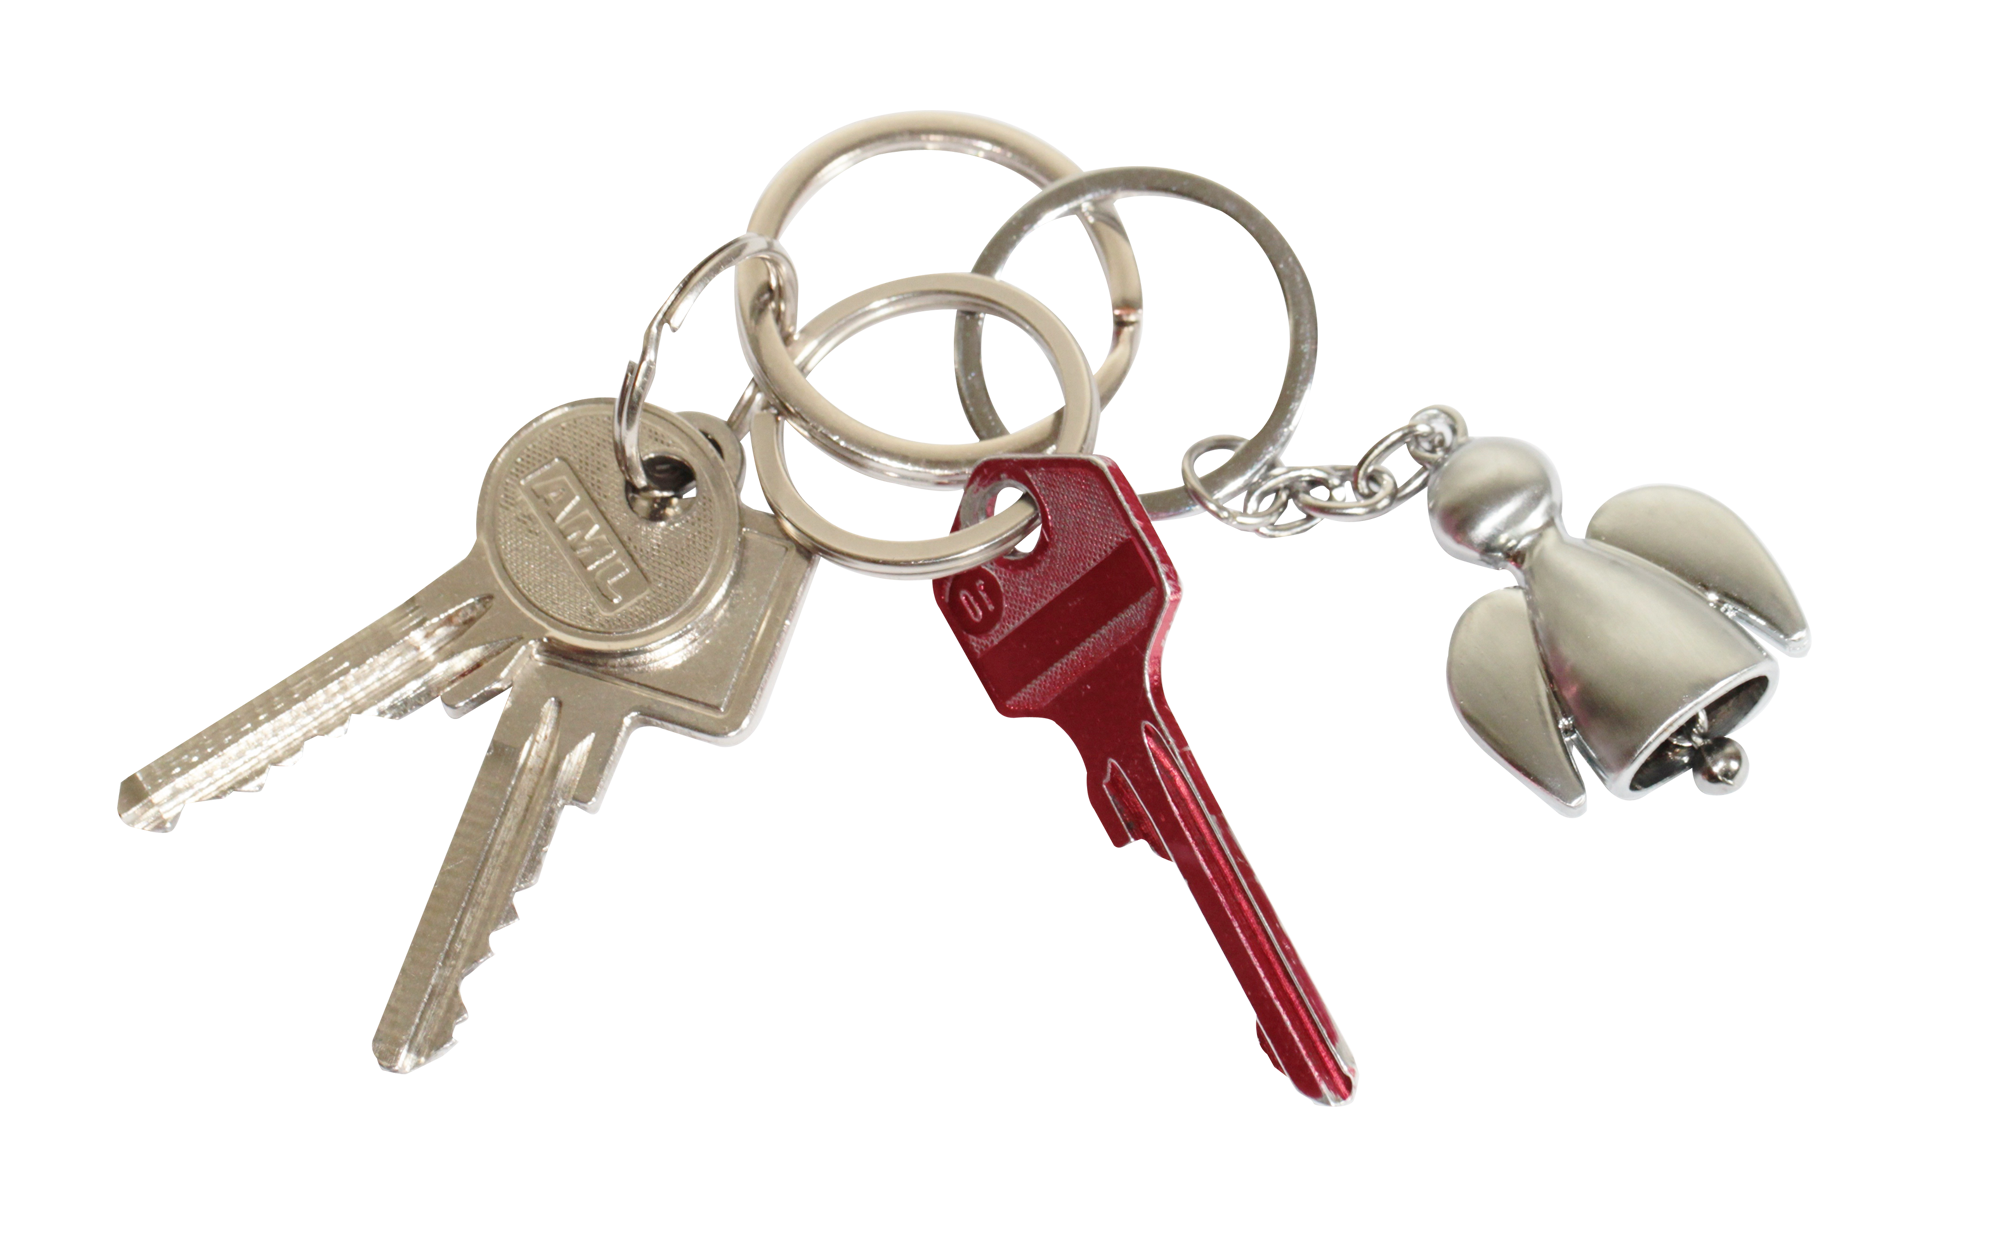 A Group Of Keys On A Key Chain